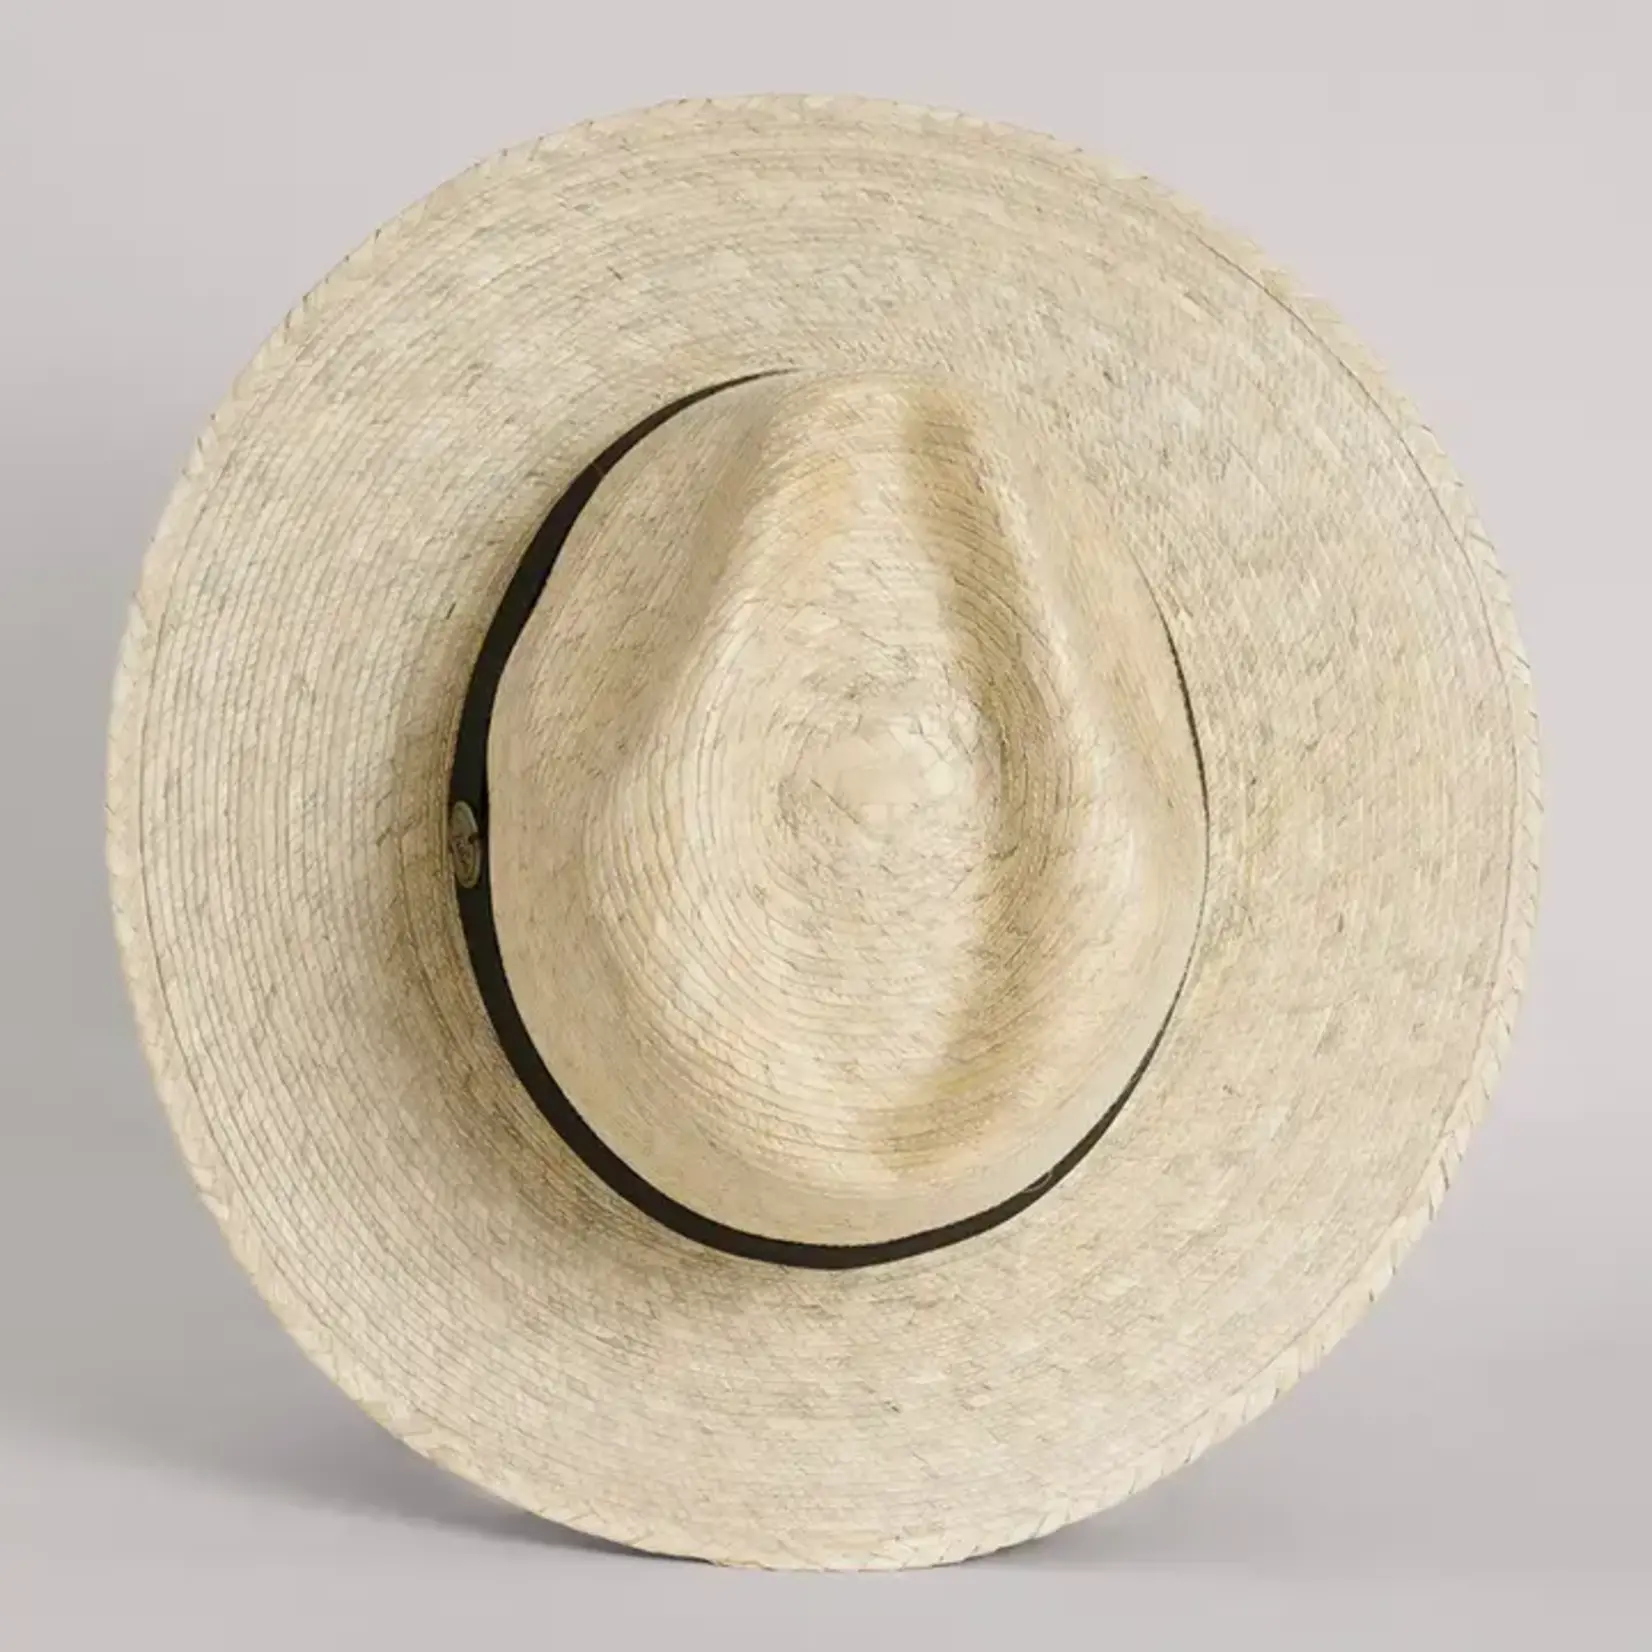 Tula Hats Explorer Black Band Hat